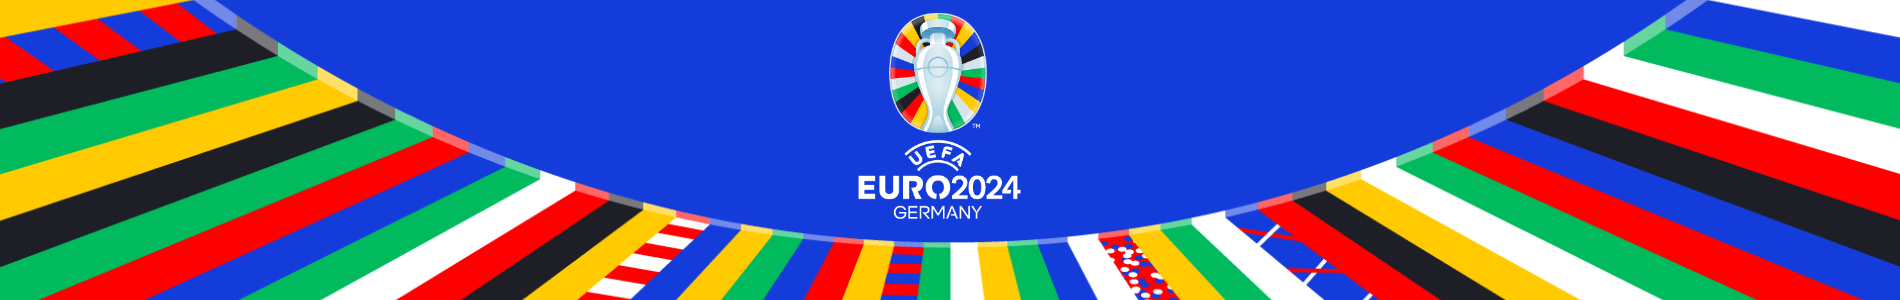 euro 2024 jerseys